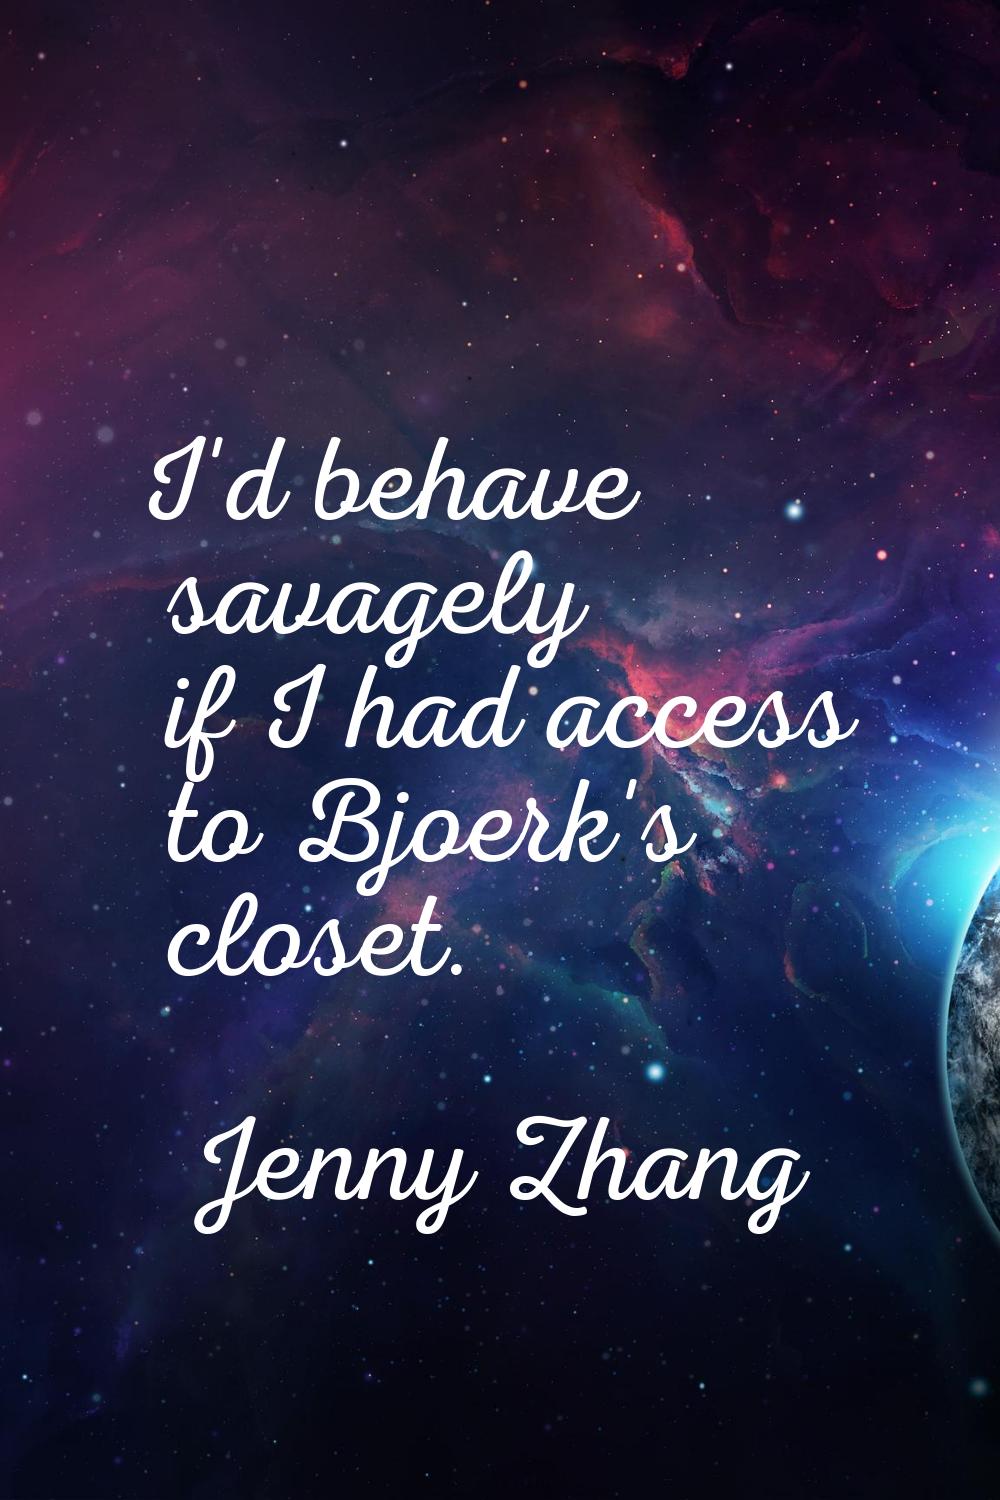 I'd behave savagely if I had access to Bjoerk's closet.